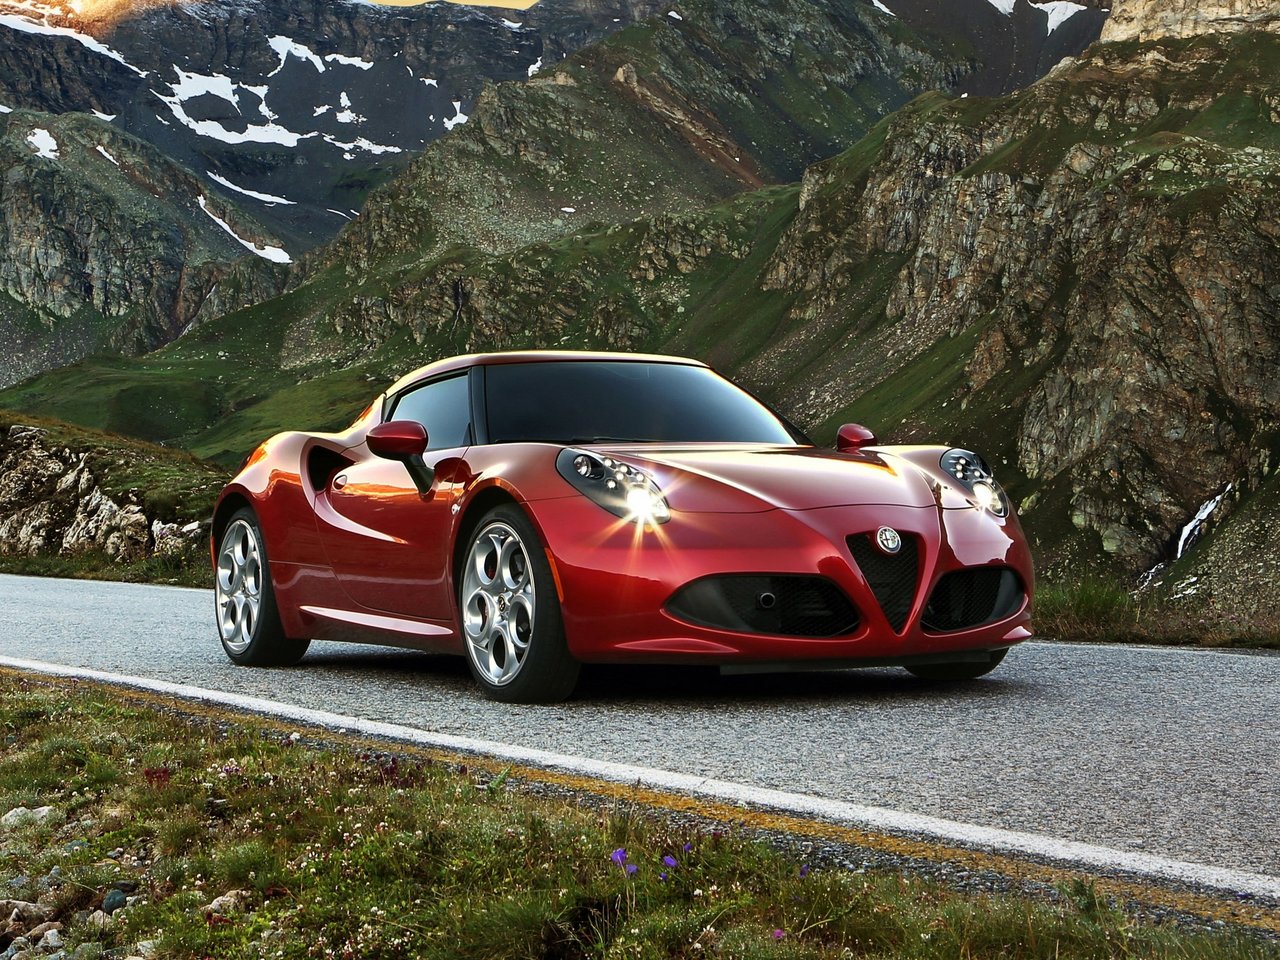 Расход газа одной комплектации купе Alfa Romeo 4C. Разница стоимости заправки газом и бензином. Автономный пробег до и после установки ГБО.